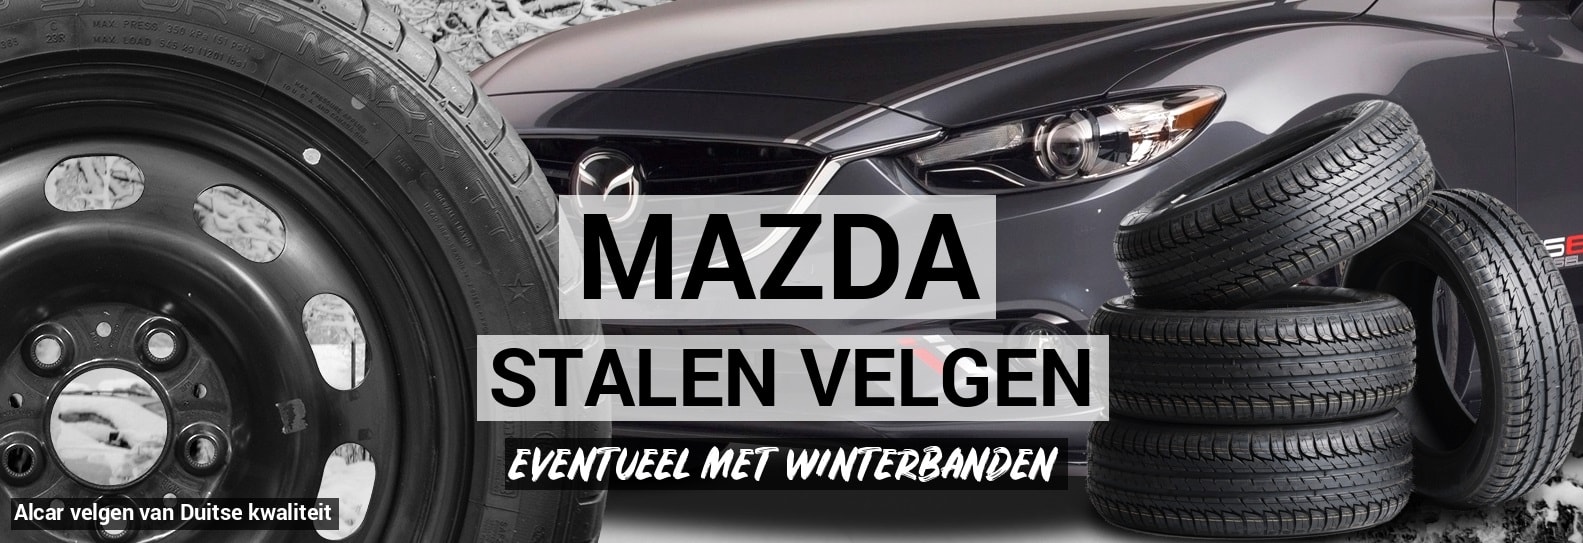 Mazda stalen velgen